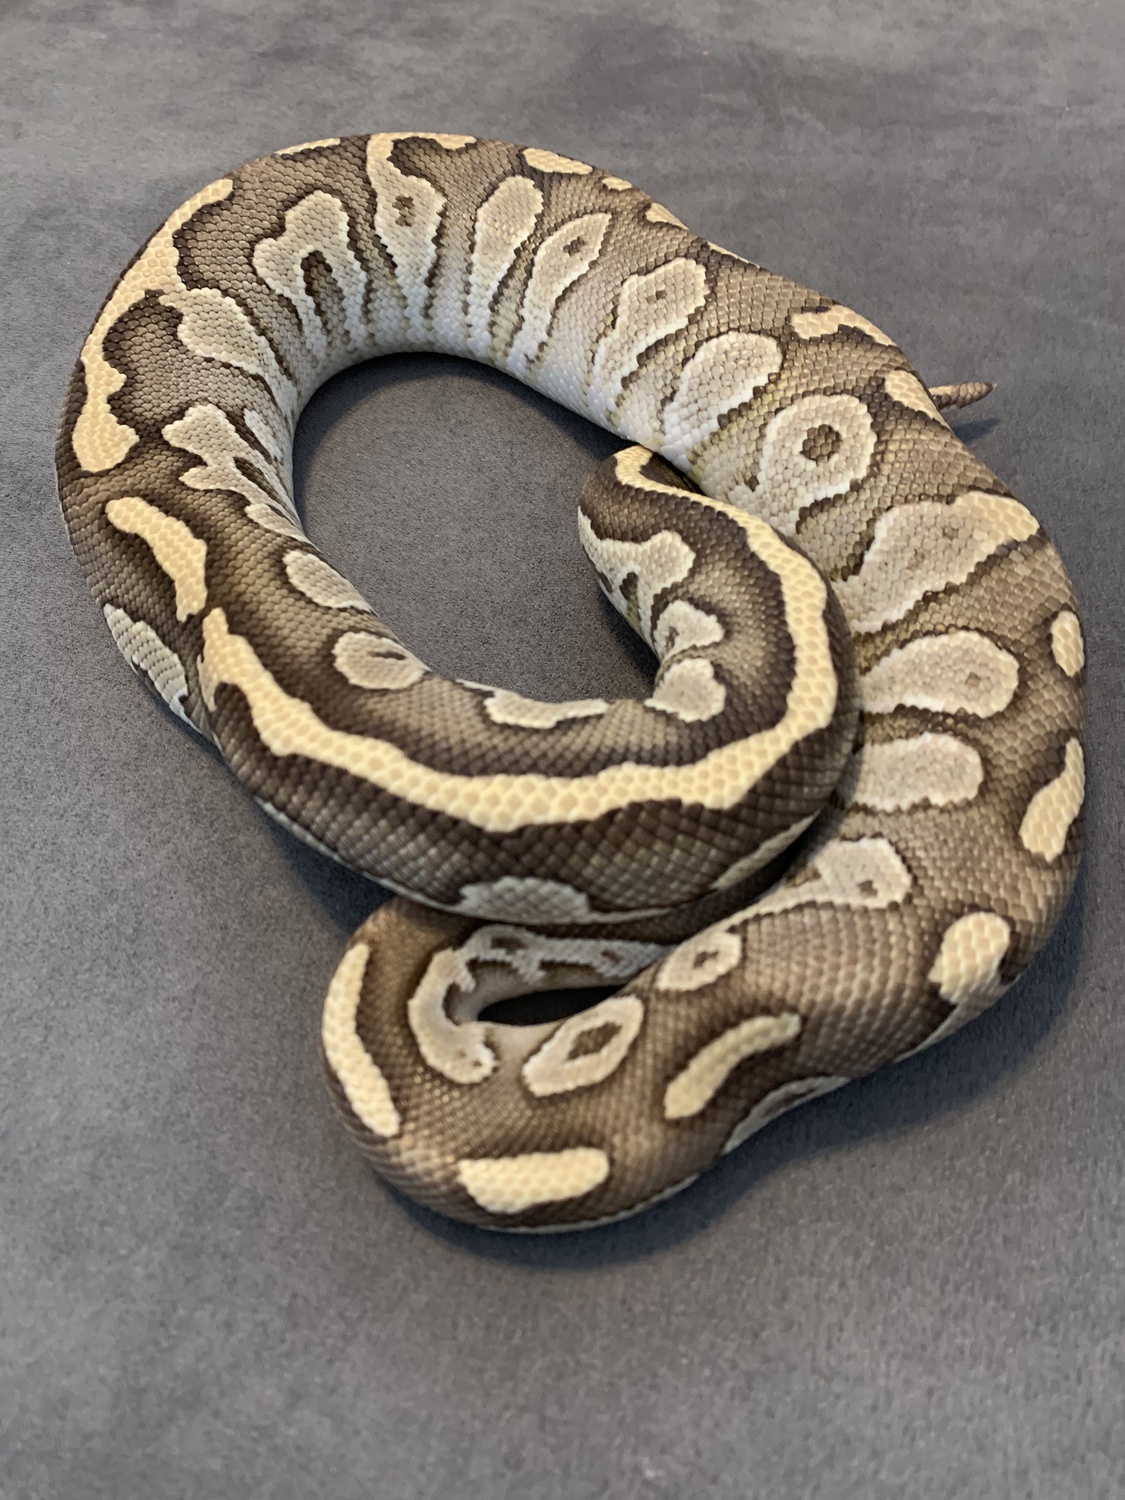 Lesser Sapphire Ball Python by Pinnacle Pythons